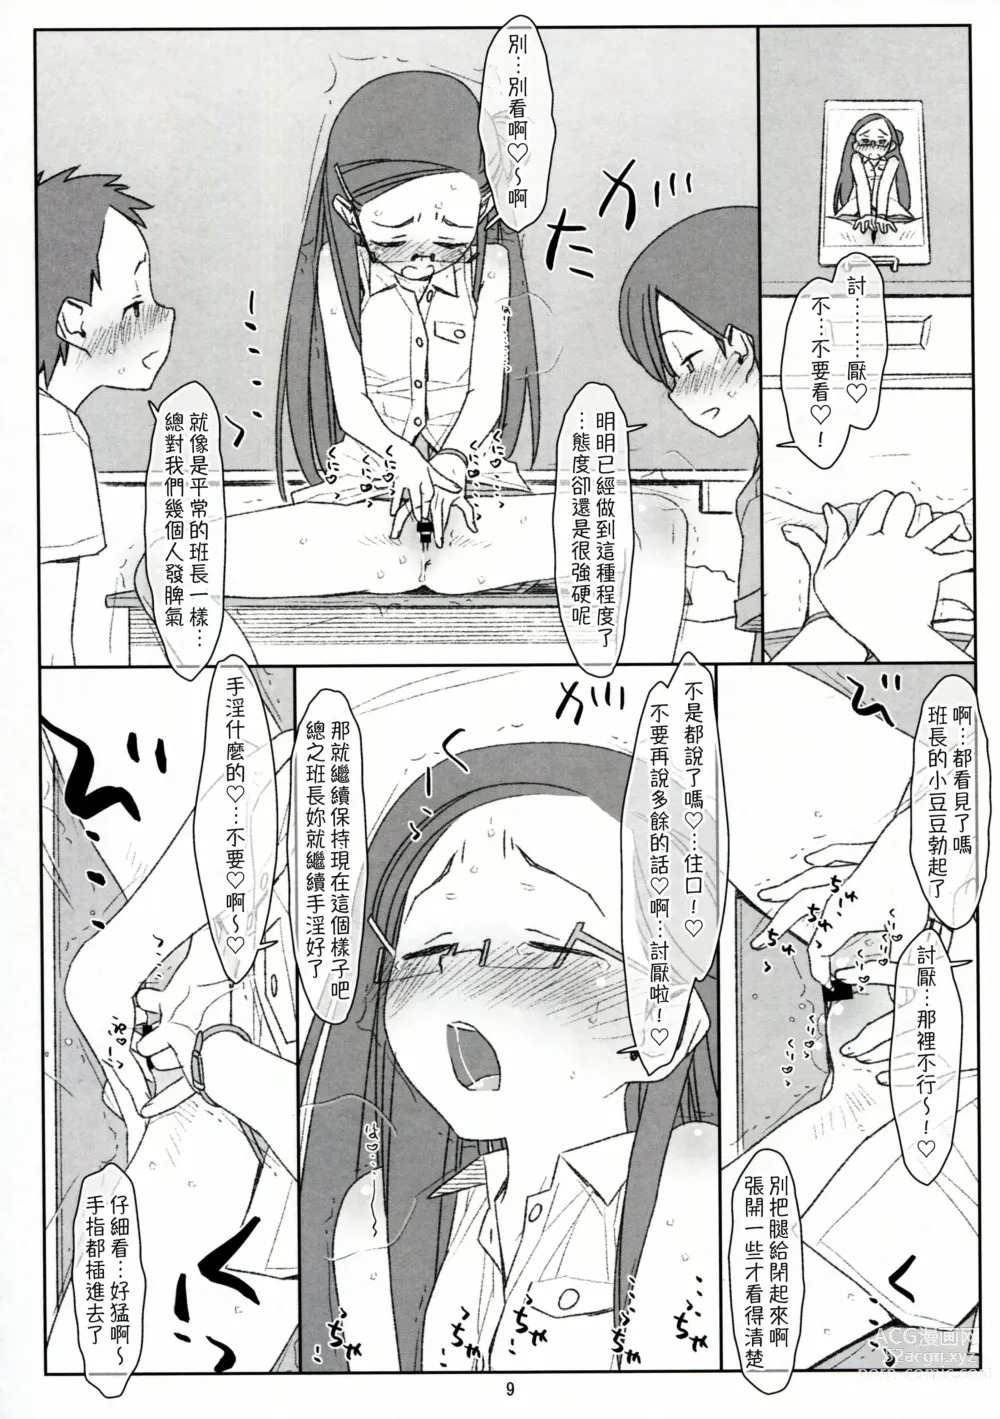 Page 9 of doujinshi Bokutachi no Super App + ②